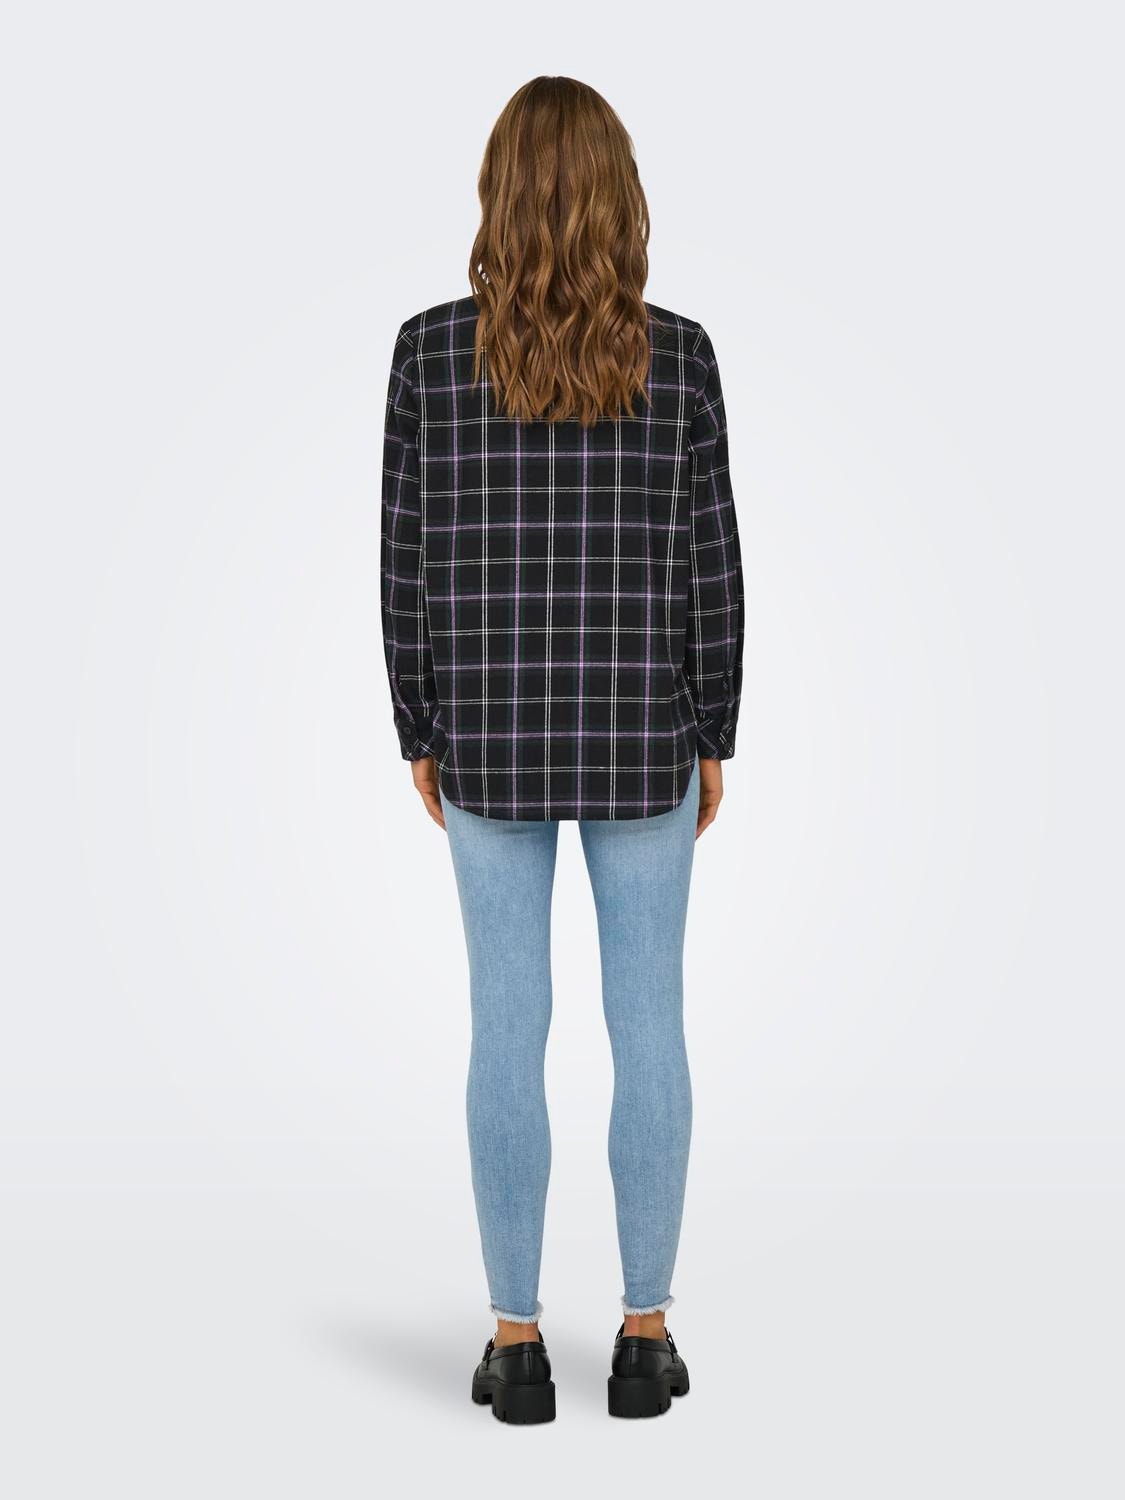 ONLY Checkered shirt -Black - 15328831